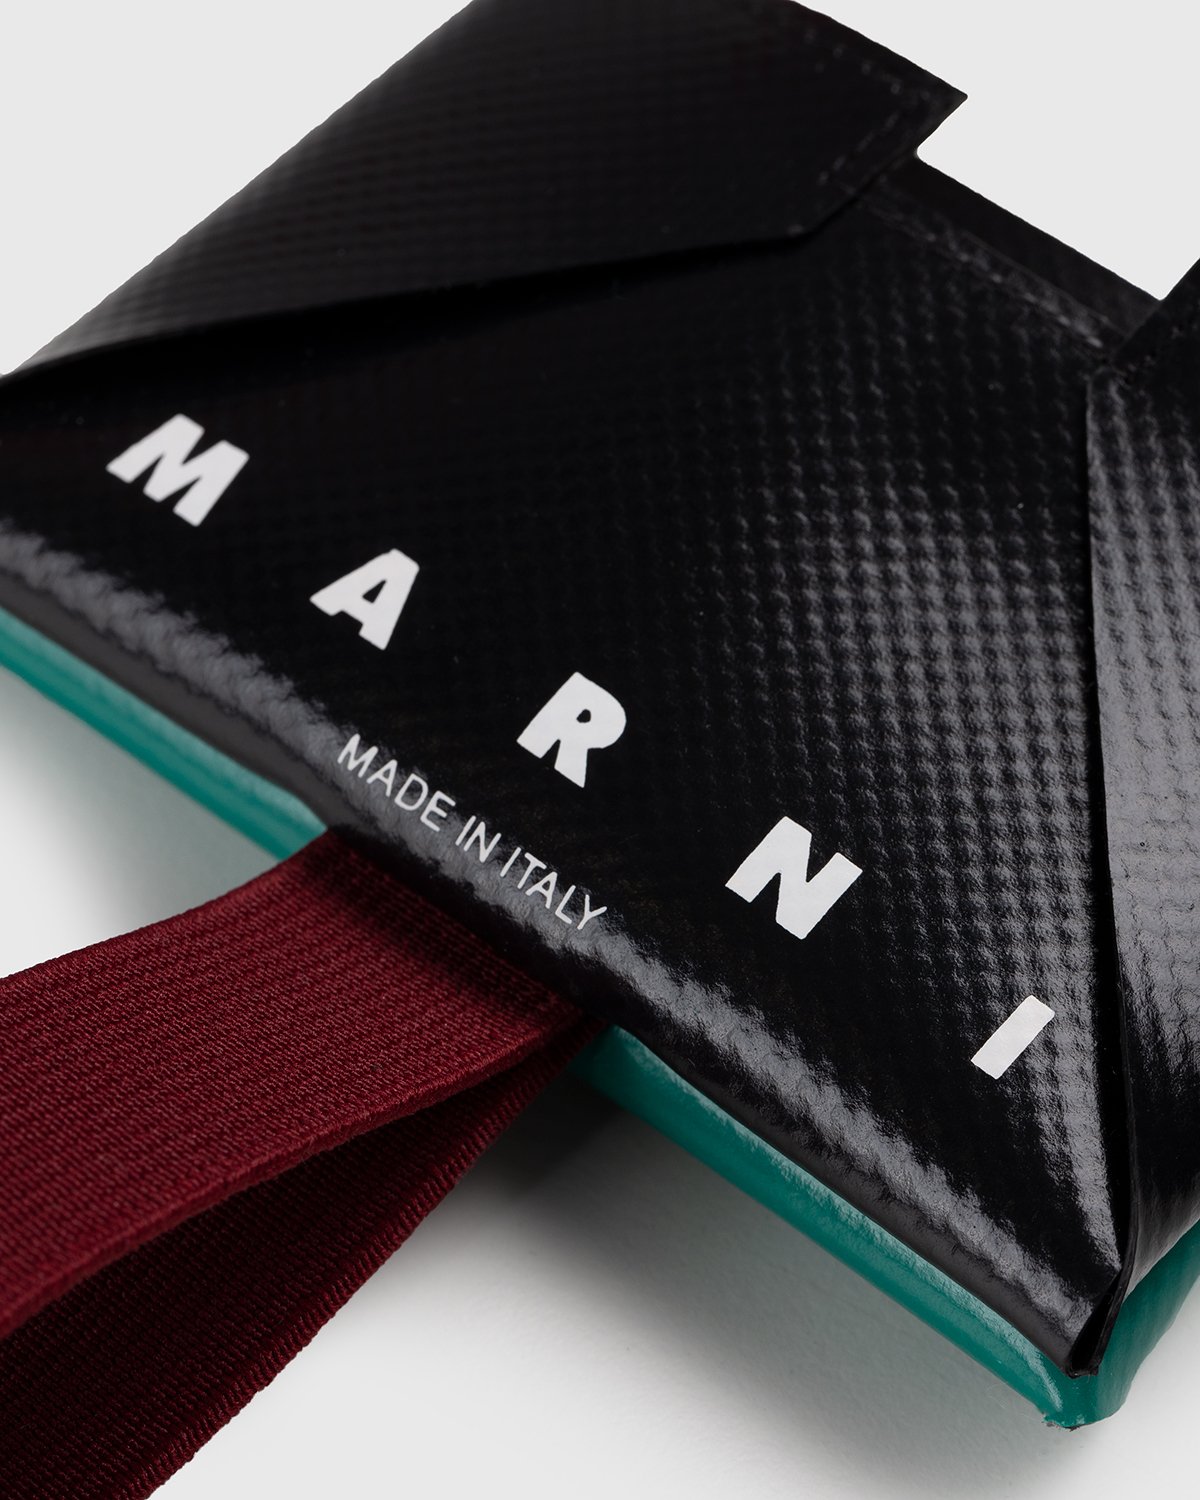 Marni - Origami Card Holder Black/Green - Accessories - Black - Image 4